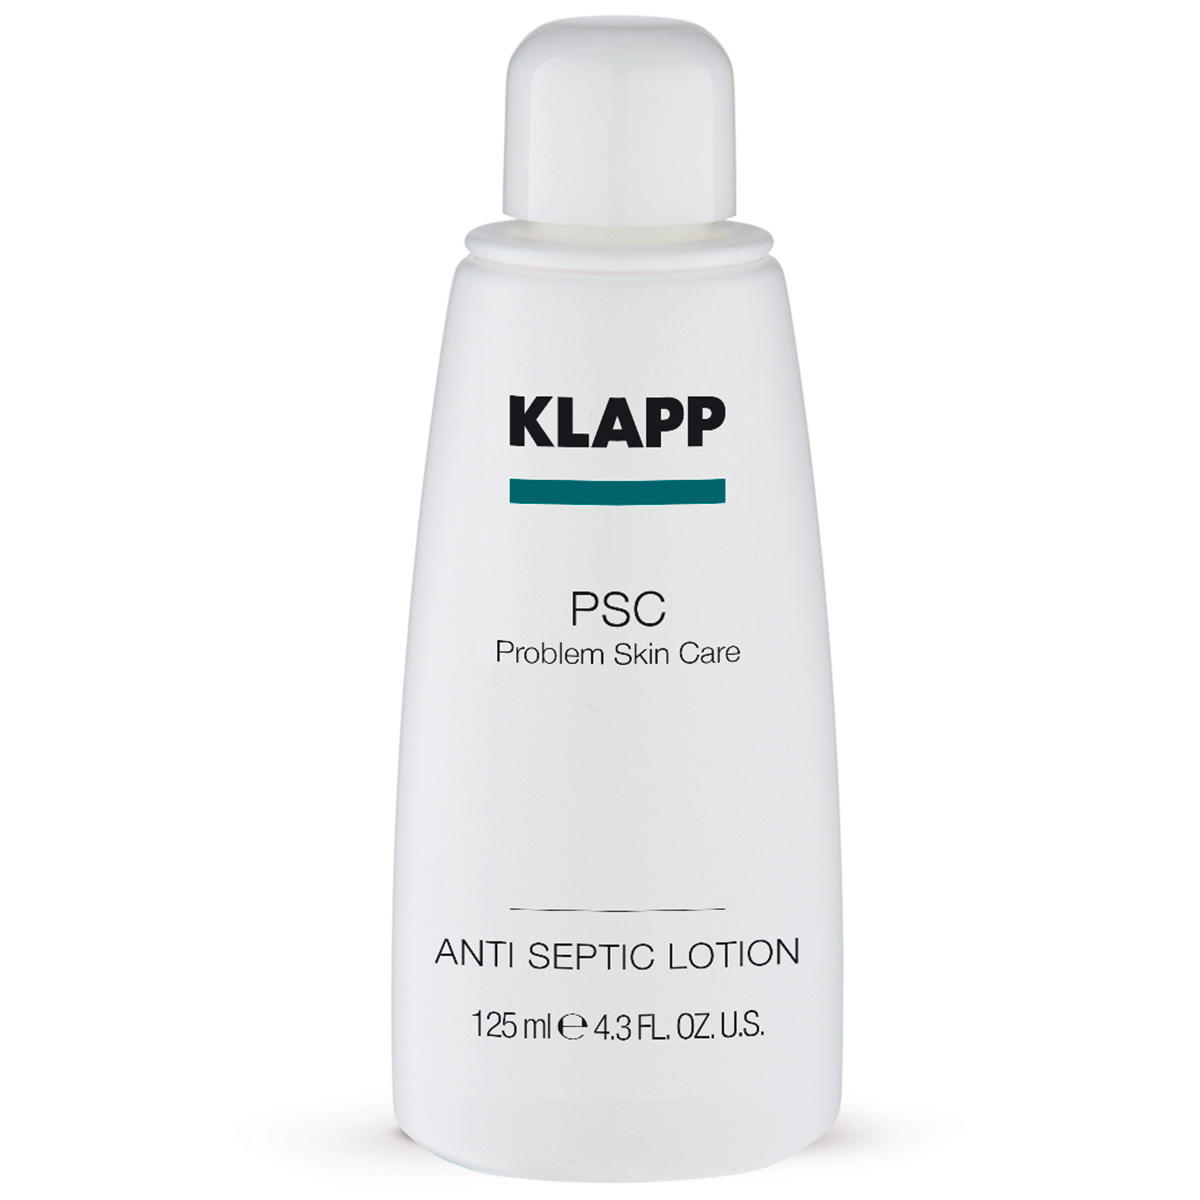 KLAPP PSC Anti Septic Lotion 125 ml - 1